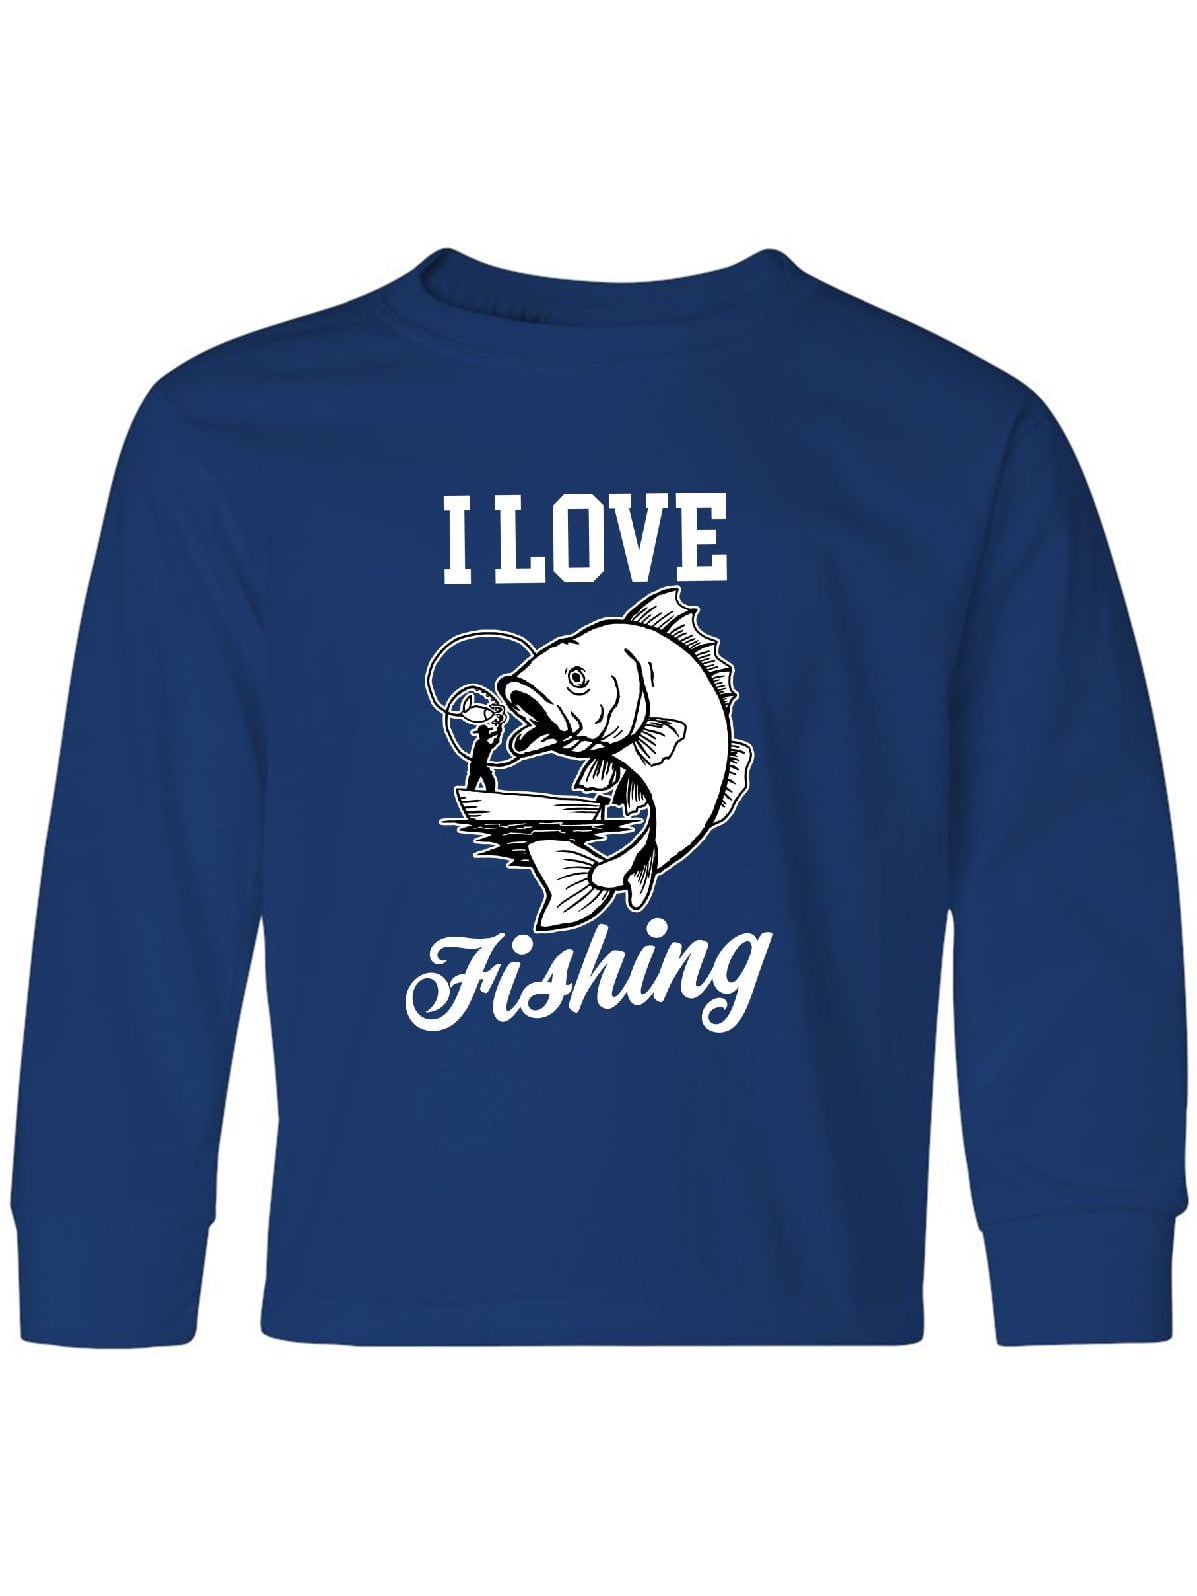 Girls Fishing Shirts